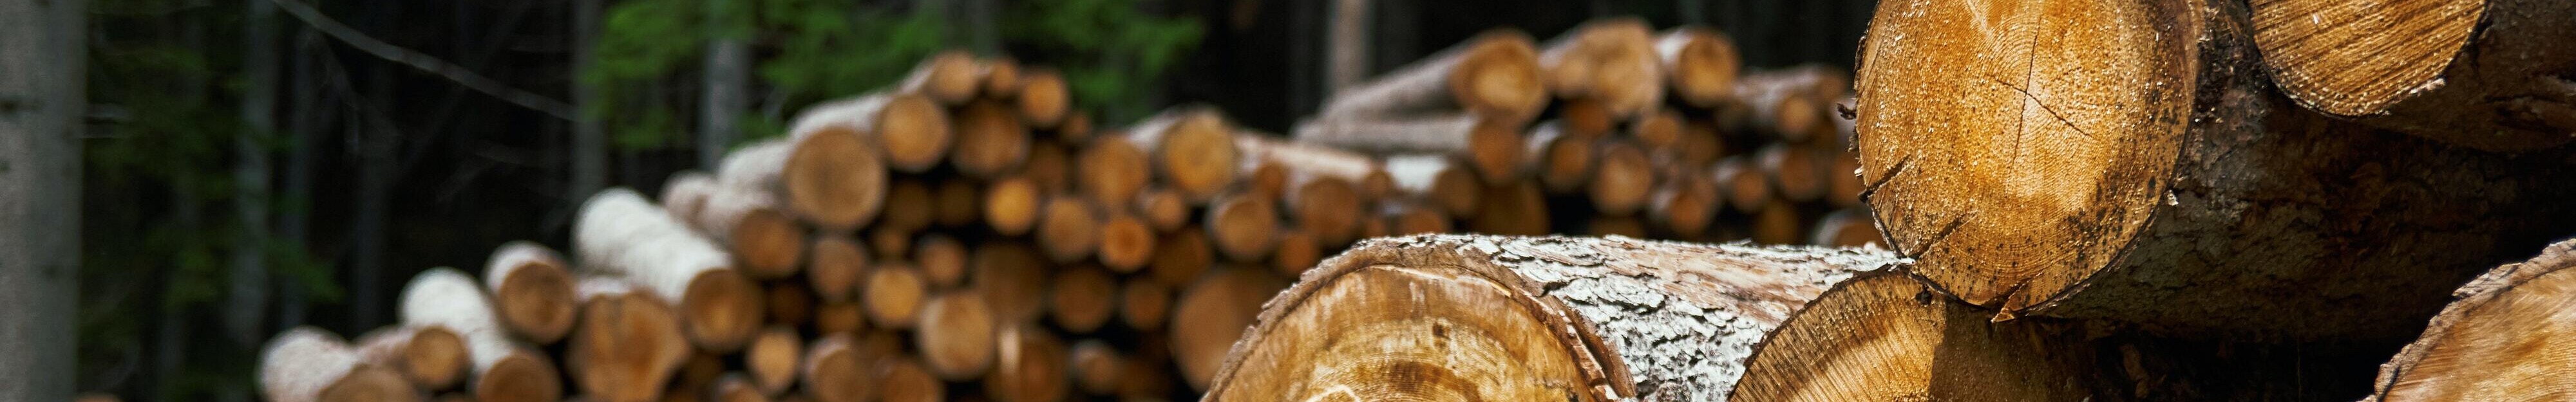 Timber Value Assessment + Harvest Planning